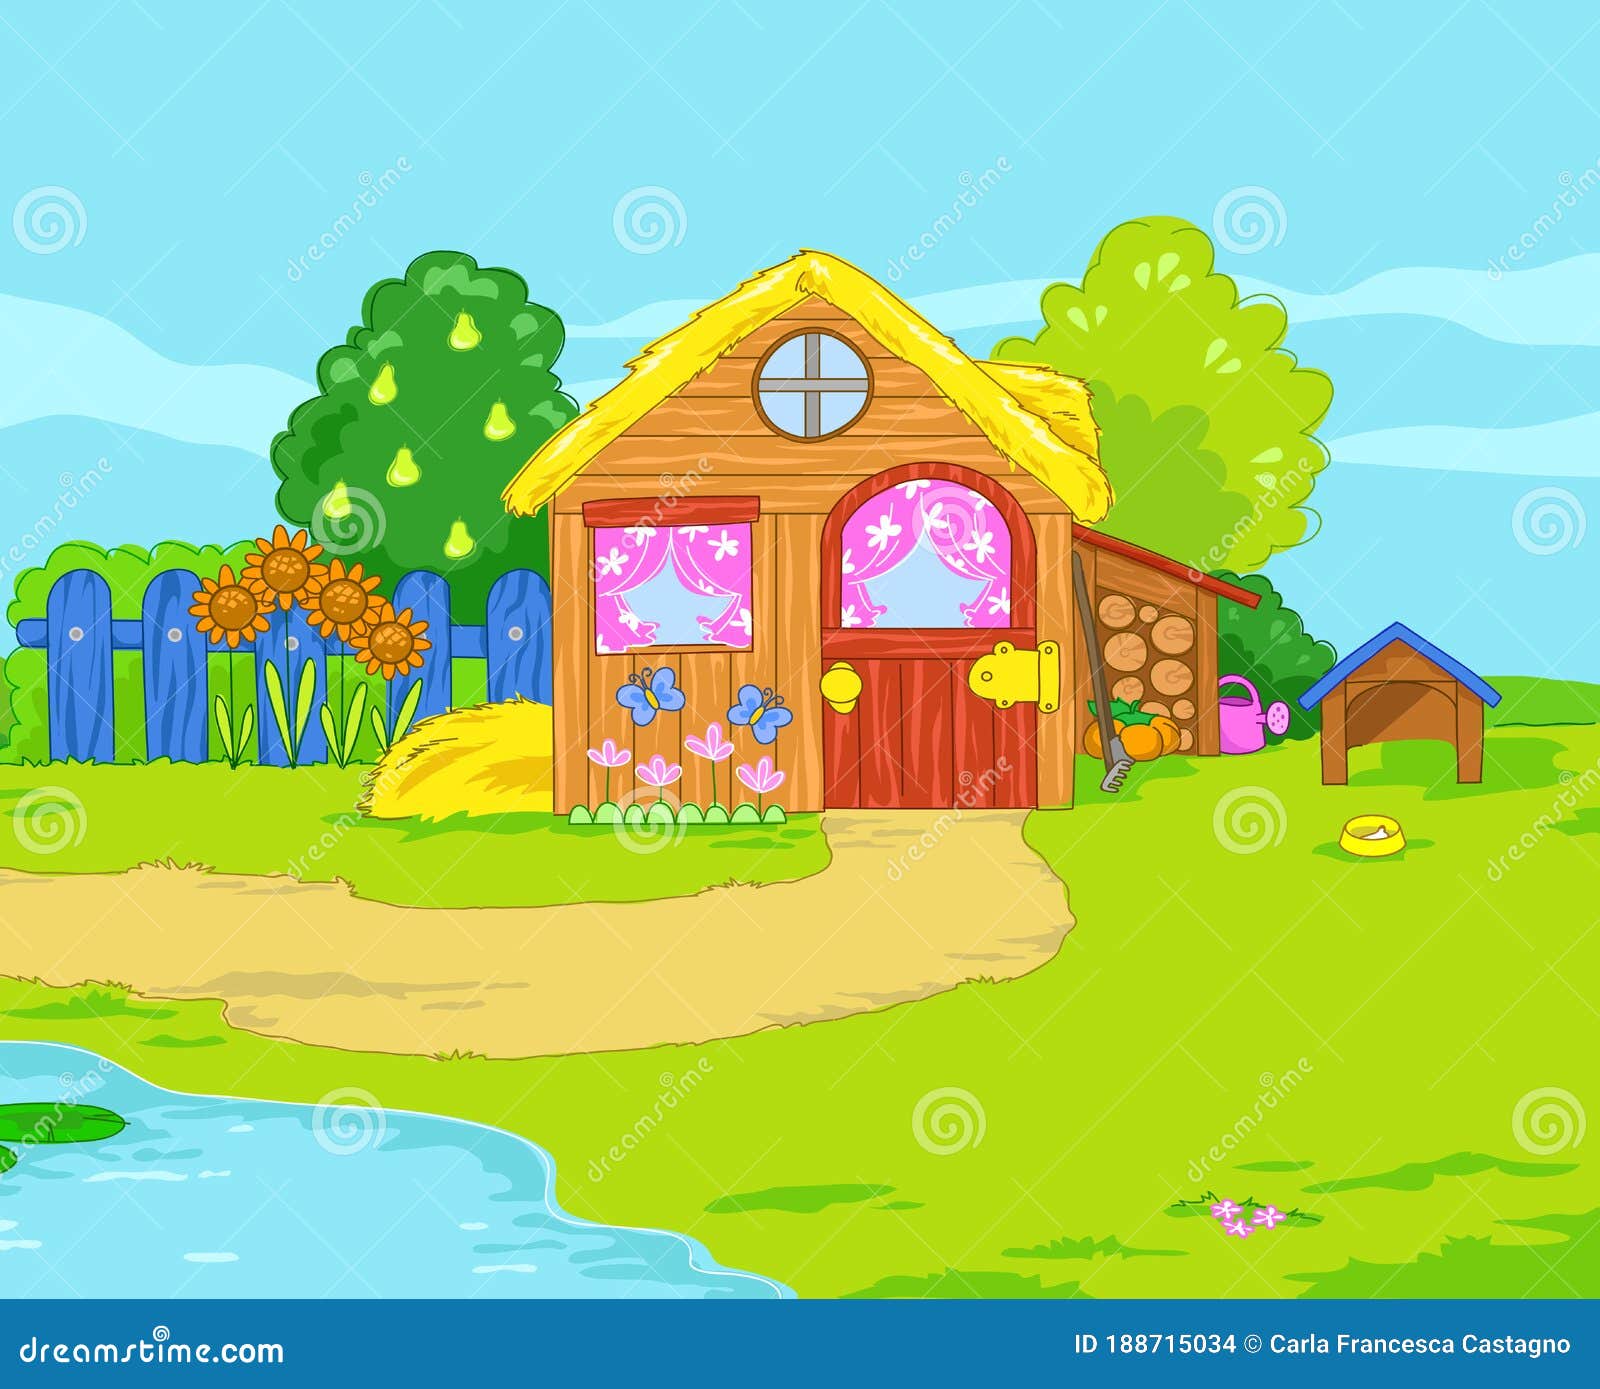 Farm With Pond Landscape Cartoon Illustration Stock Illustration